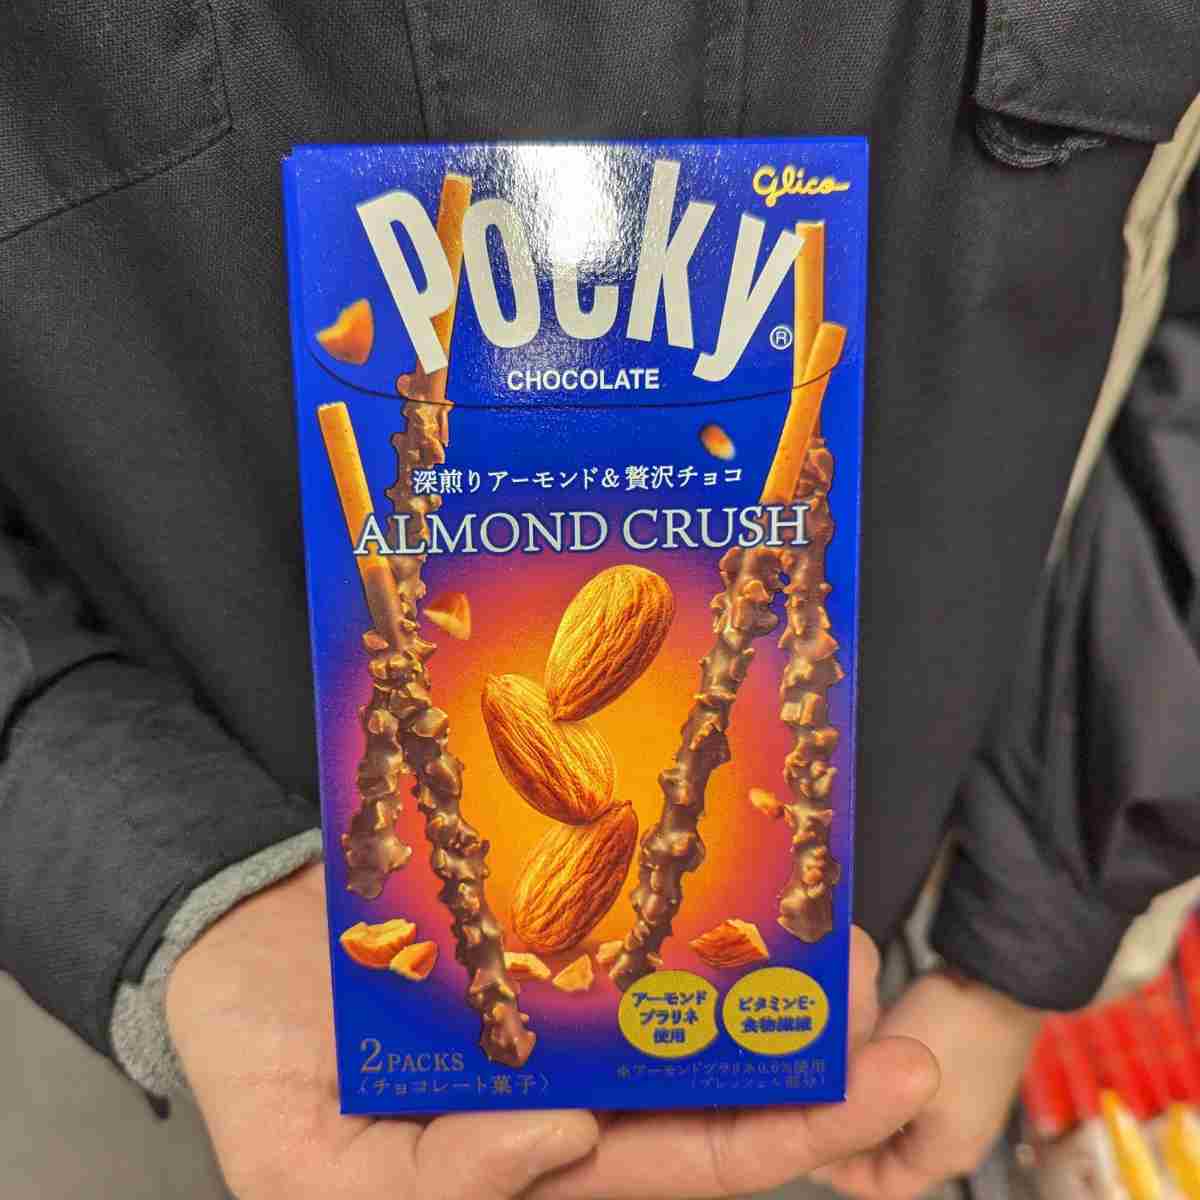 almond crush pocky chocolate